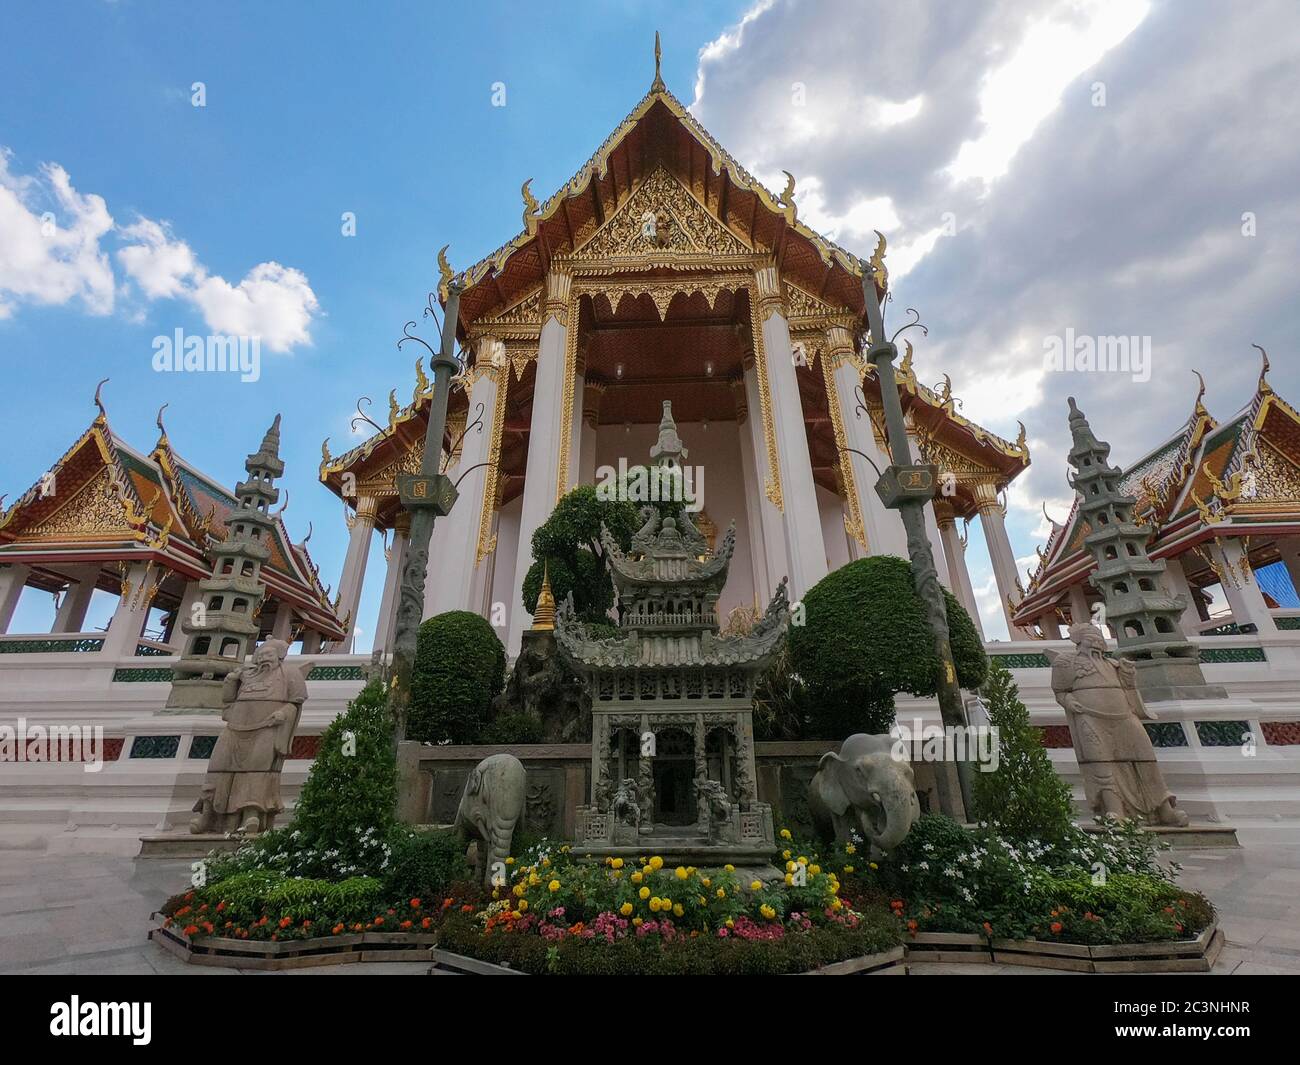 Bella architettura antica del tempio buddista Wat Suthat Thepwararam a Bangkok, Thailandia Foto Stock